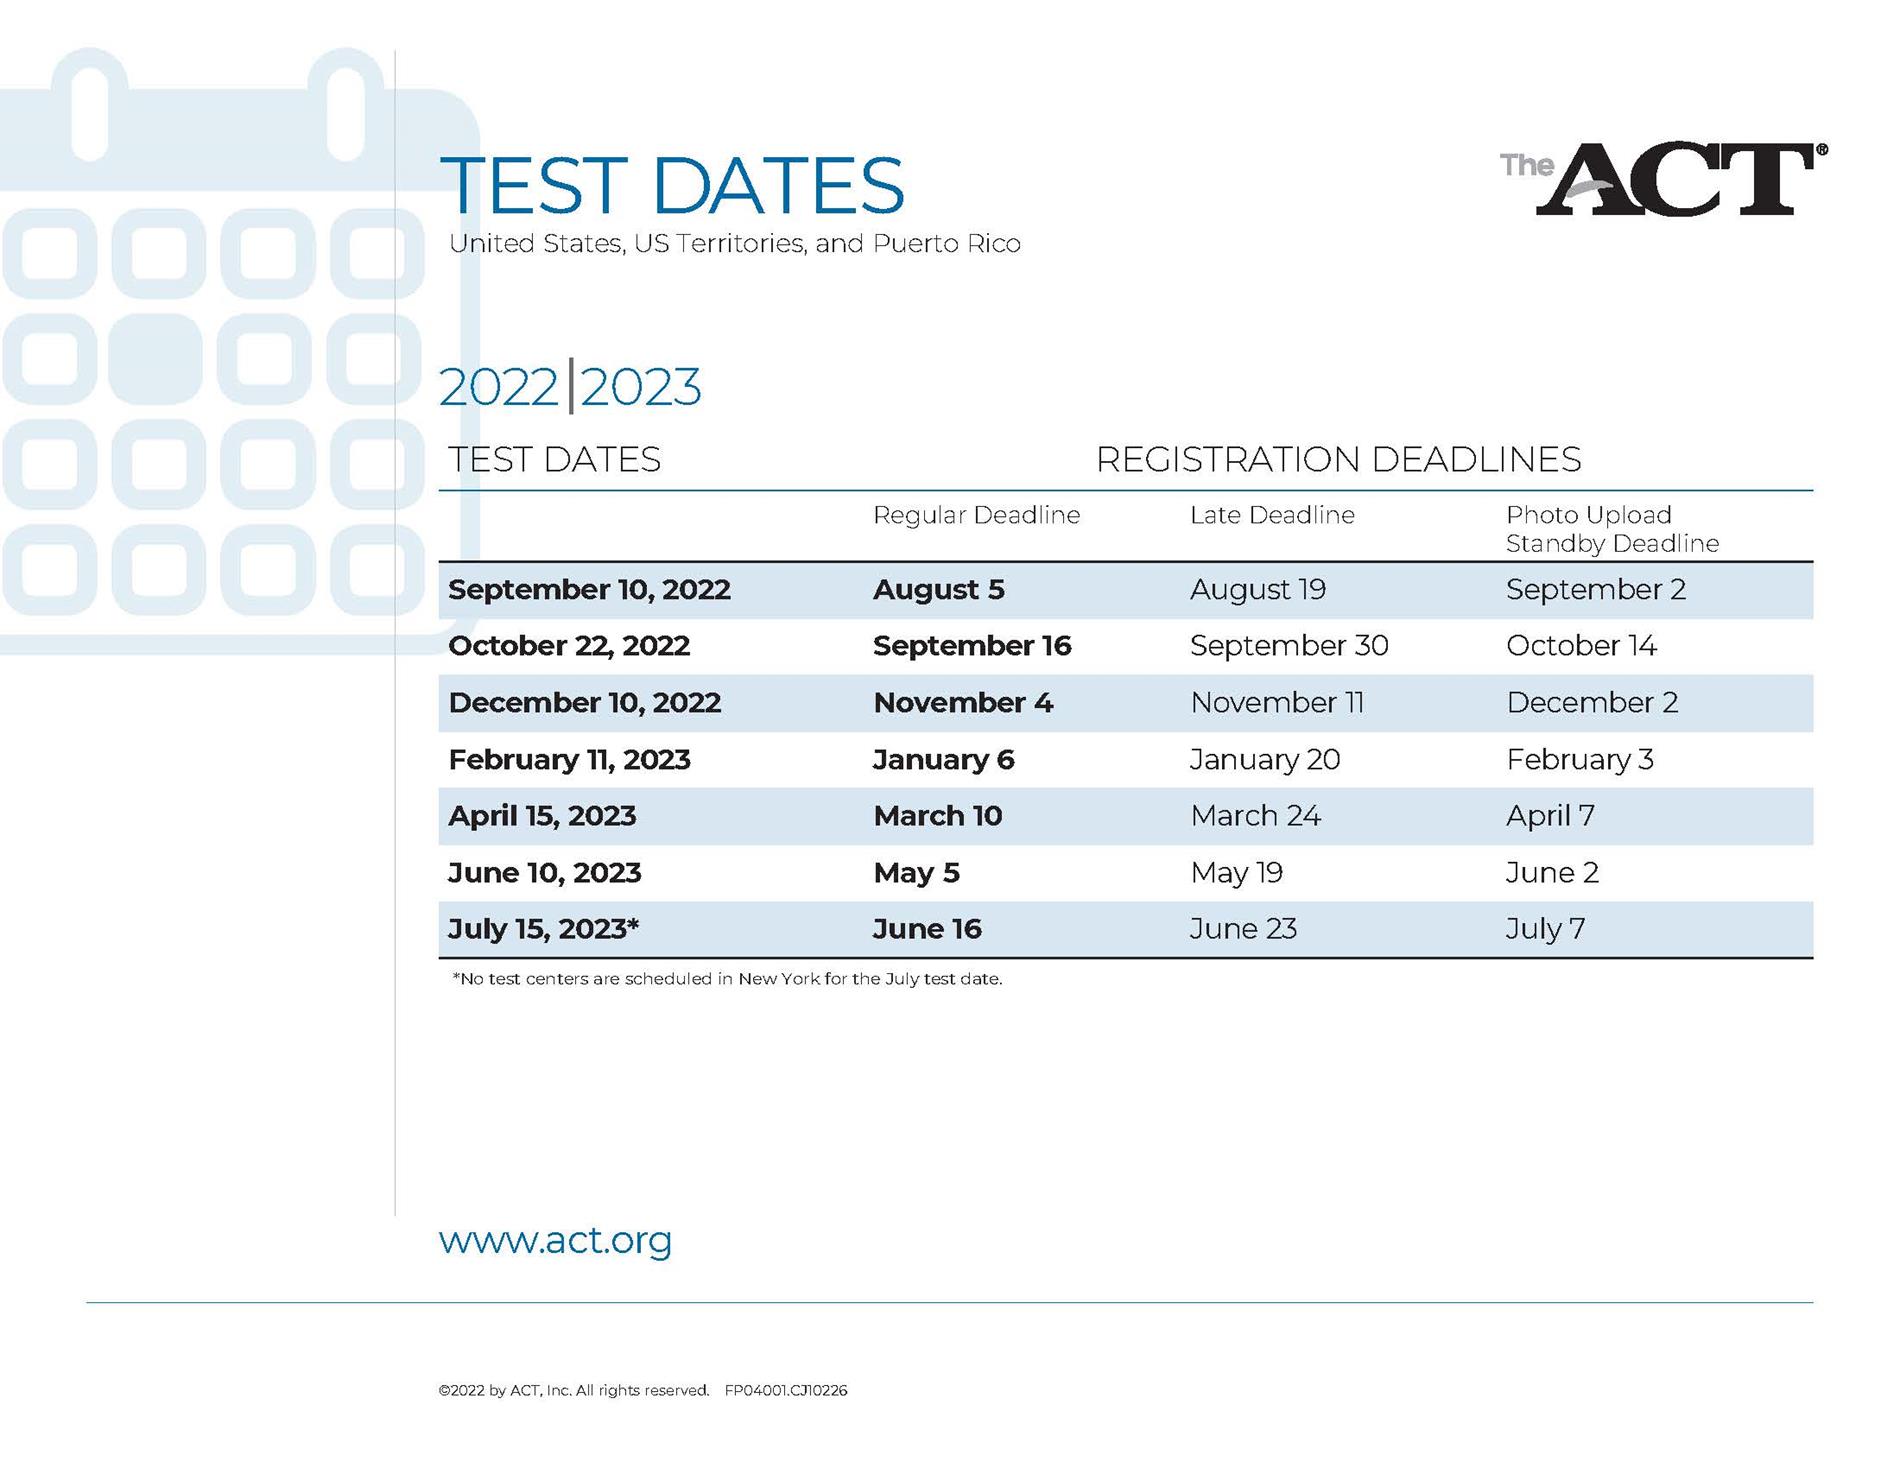 ACT Testing Dates